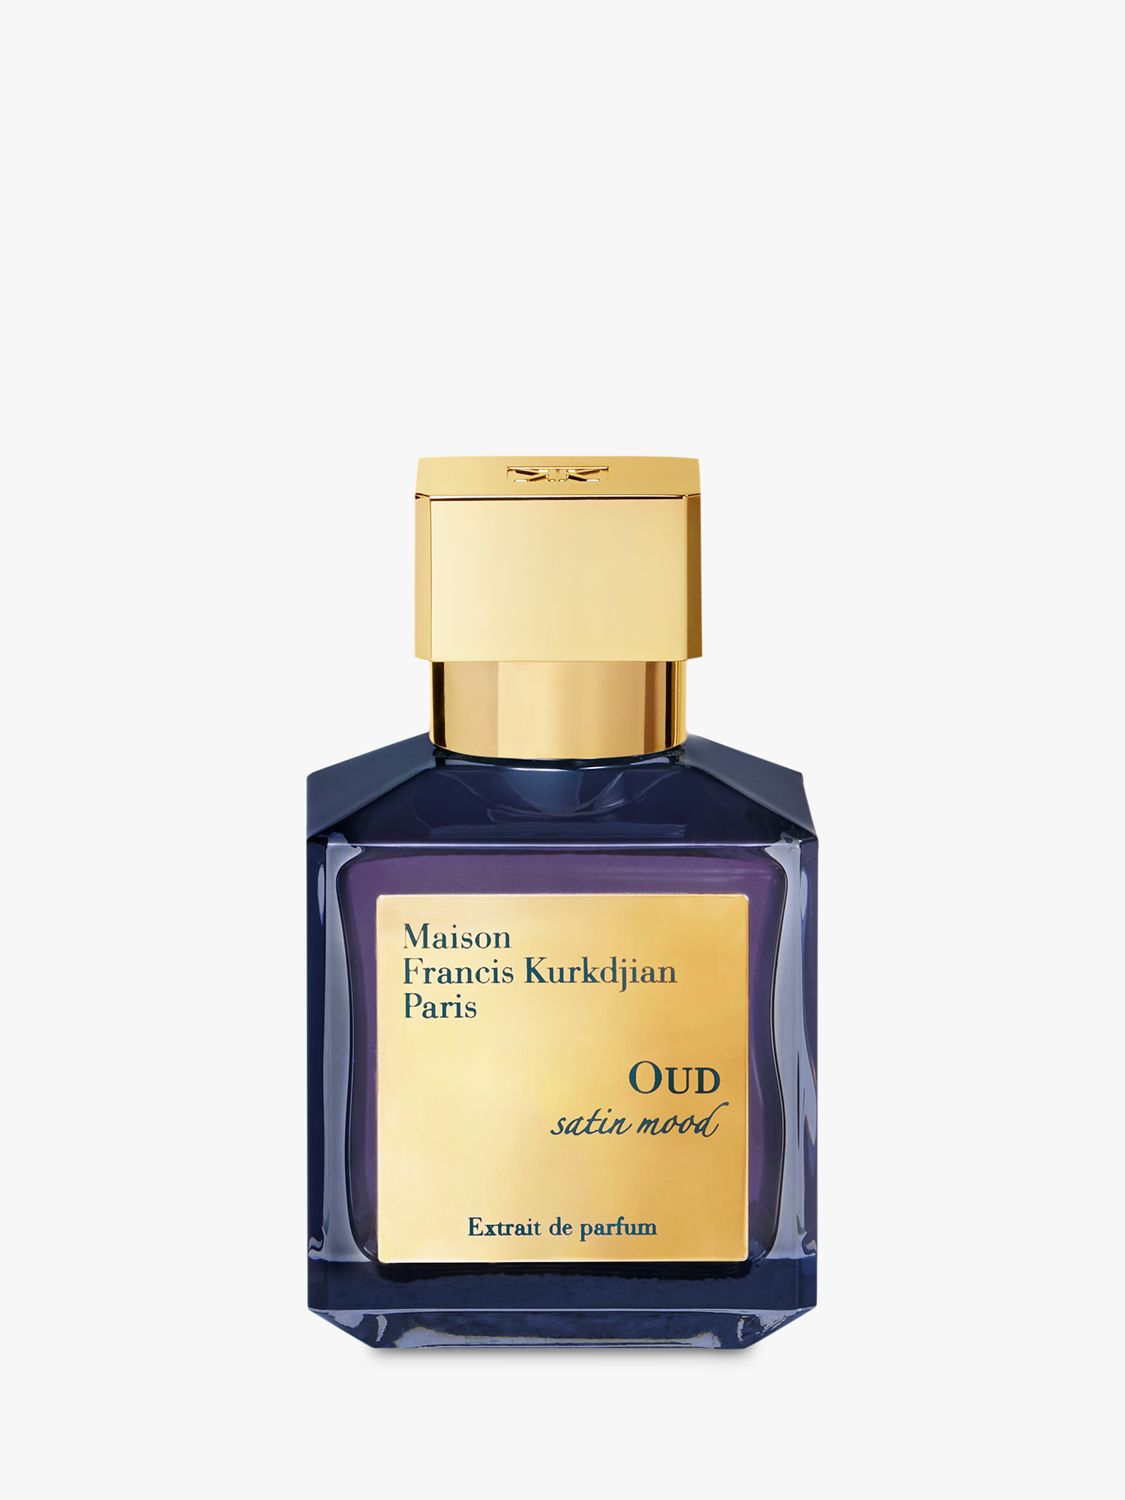 Maison Francis Kurkdjian Oud Silk Mood Extrait de Parfum, 70ml 3